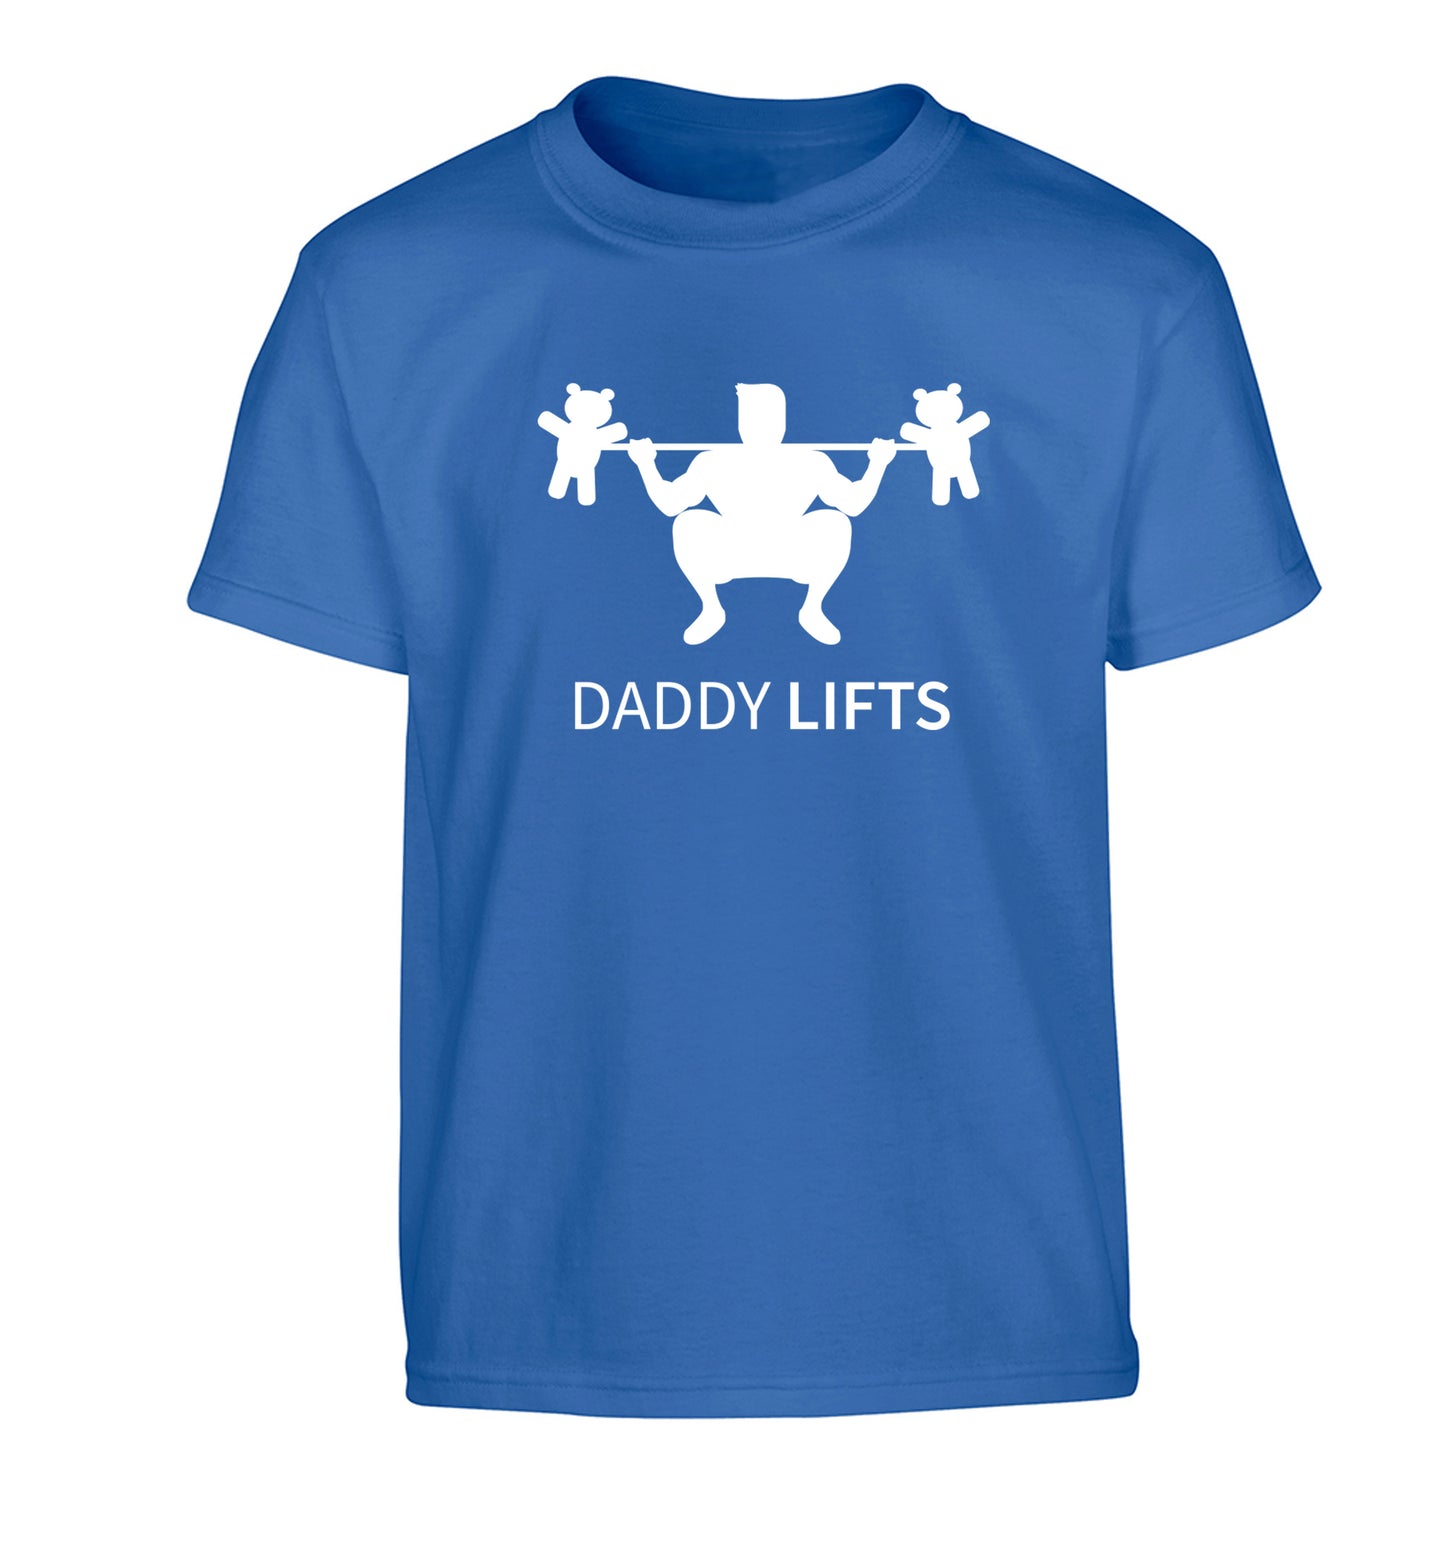 Daddy lifts Children's blue Tshirt 12-13 Years